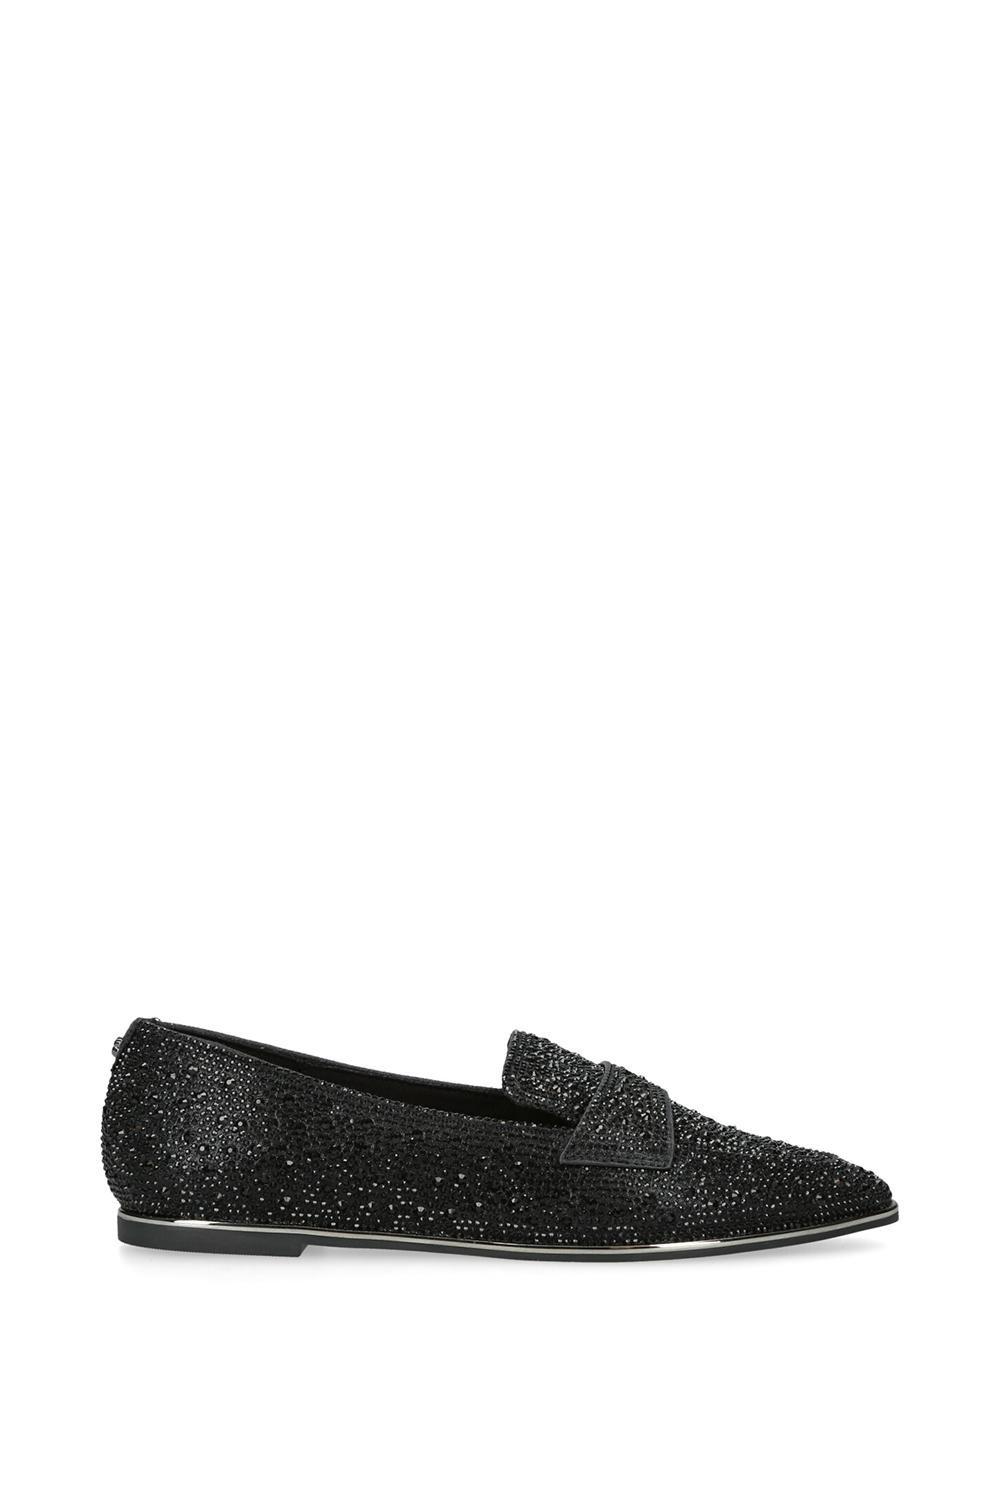 Туфли на плоской подошве из ткани 'Lexie Jewel' Carvela, черный цена и фото